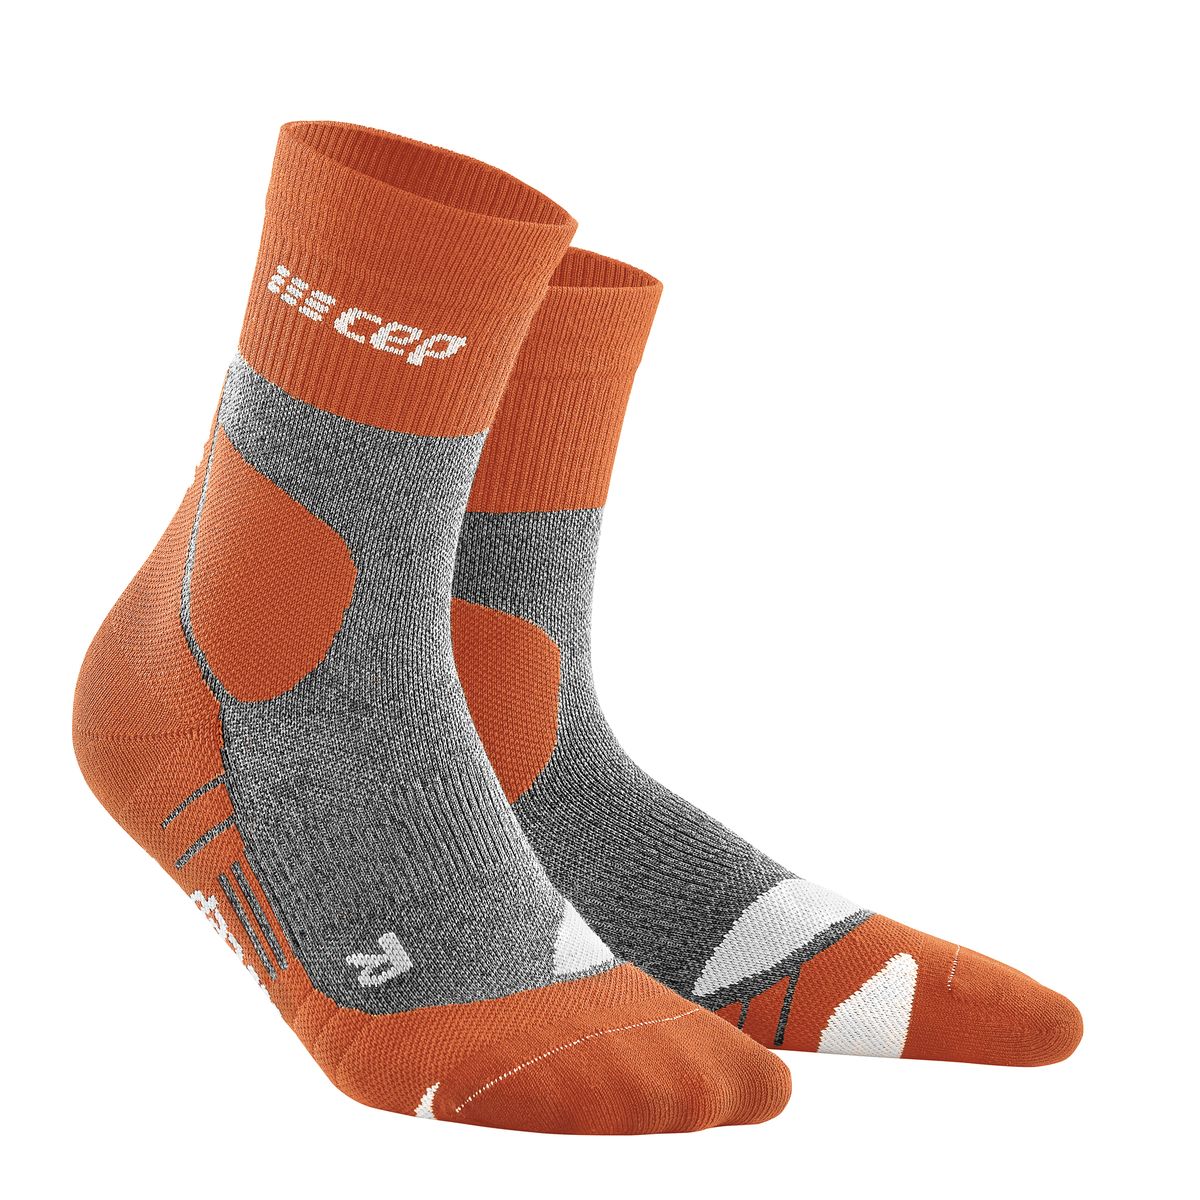 Cep Hiking Merino Mid-Cut Socks Herren Socken_1